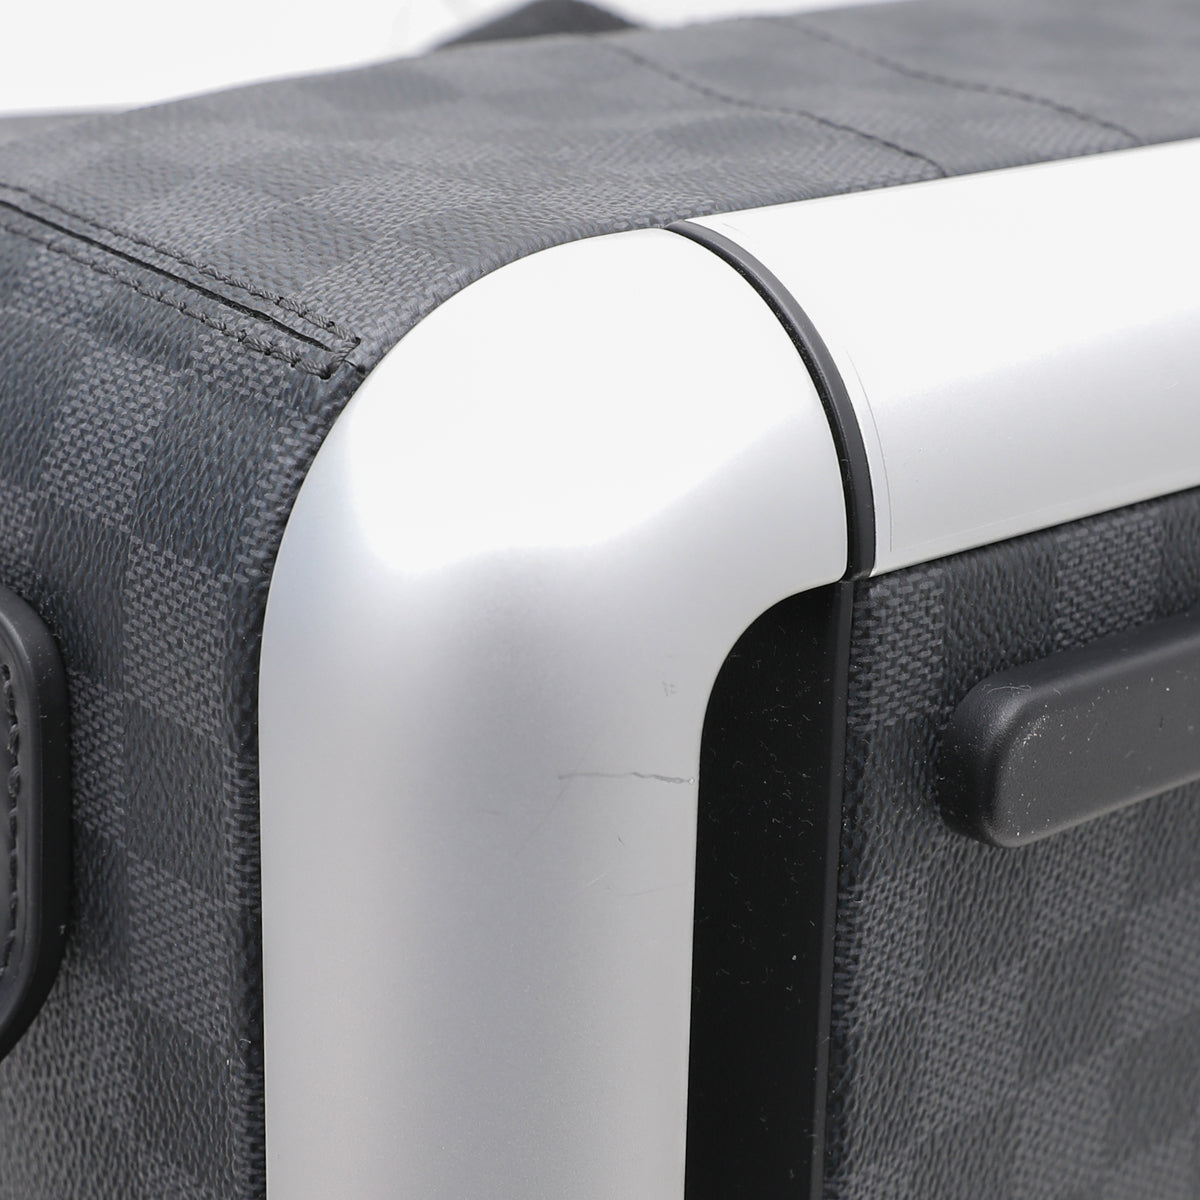 Horizon Soft Duffle 2R 65 Suitcase - Luxury Damier Graphite Canvas Grey